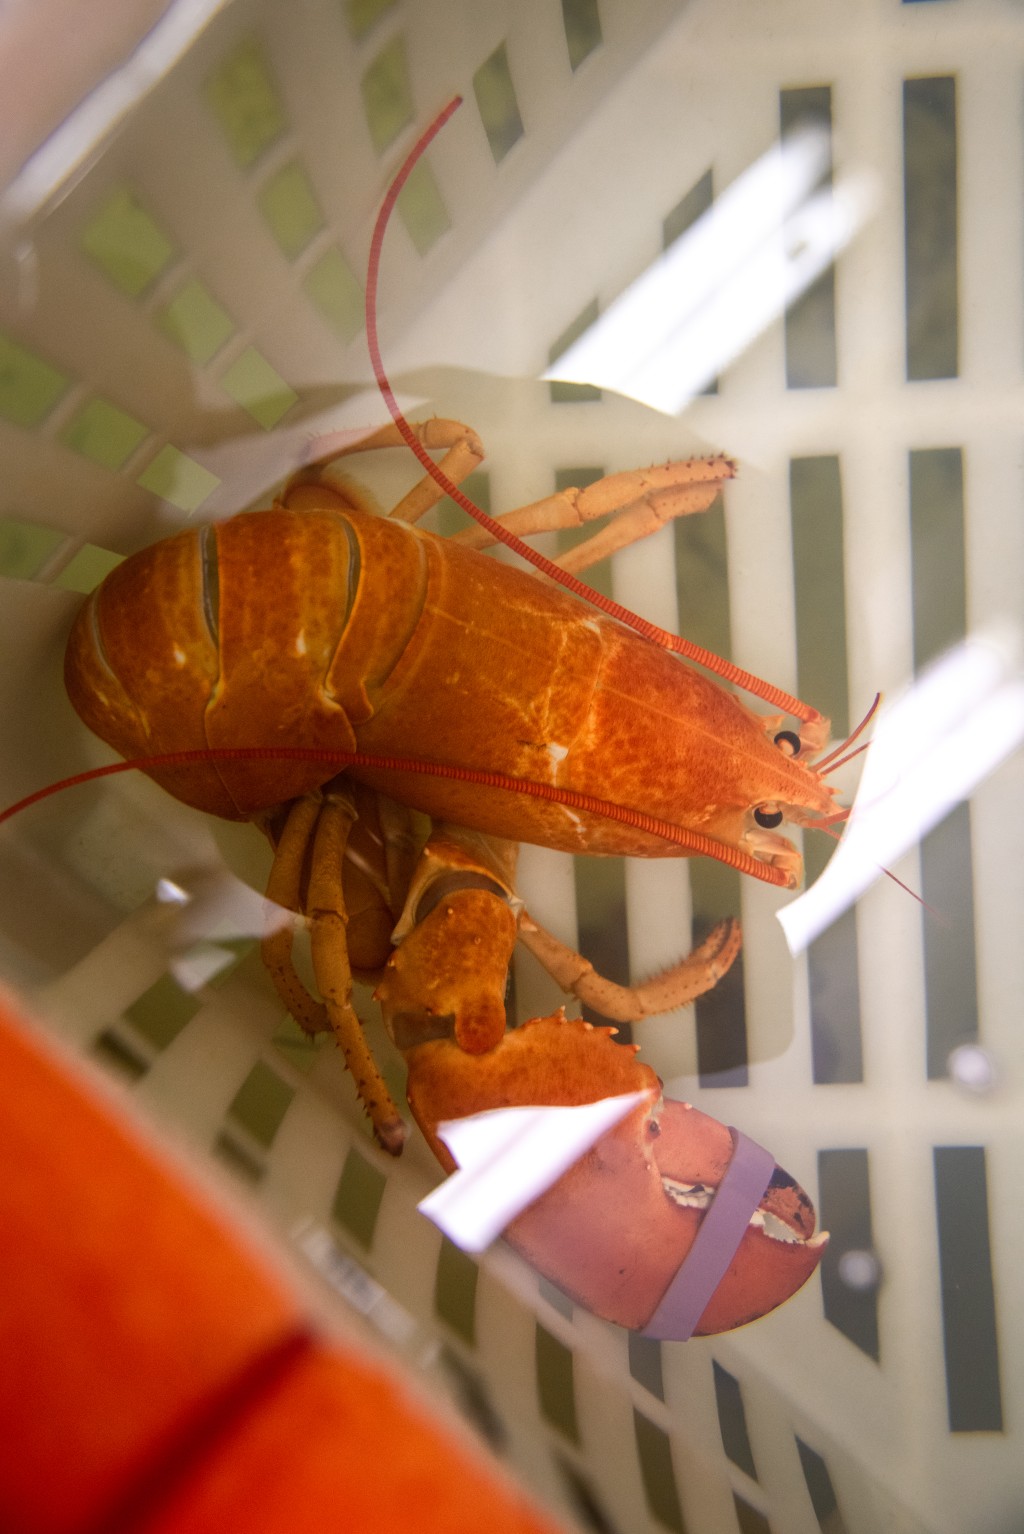 The orange lobster in her tank